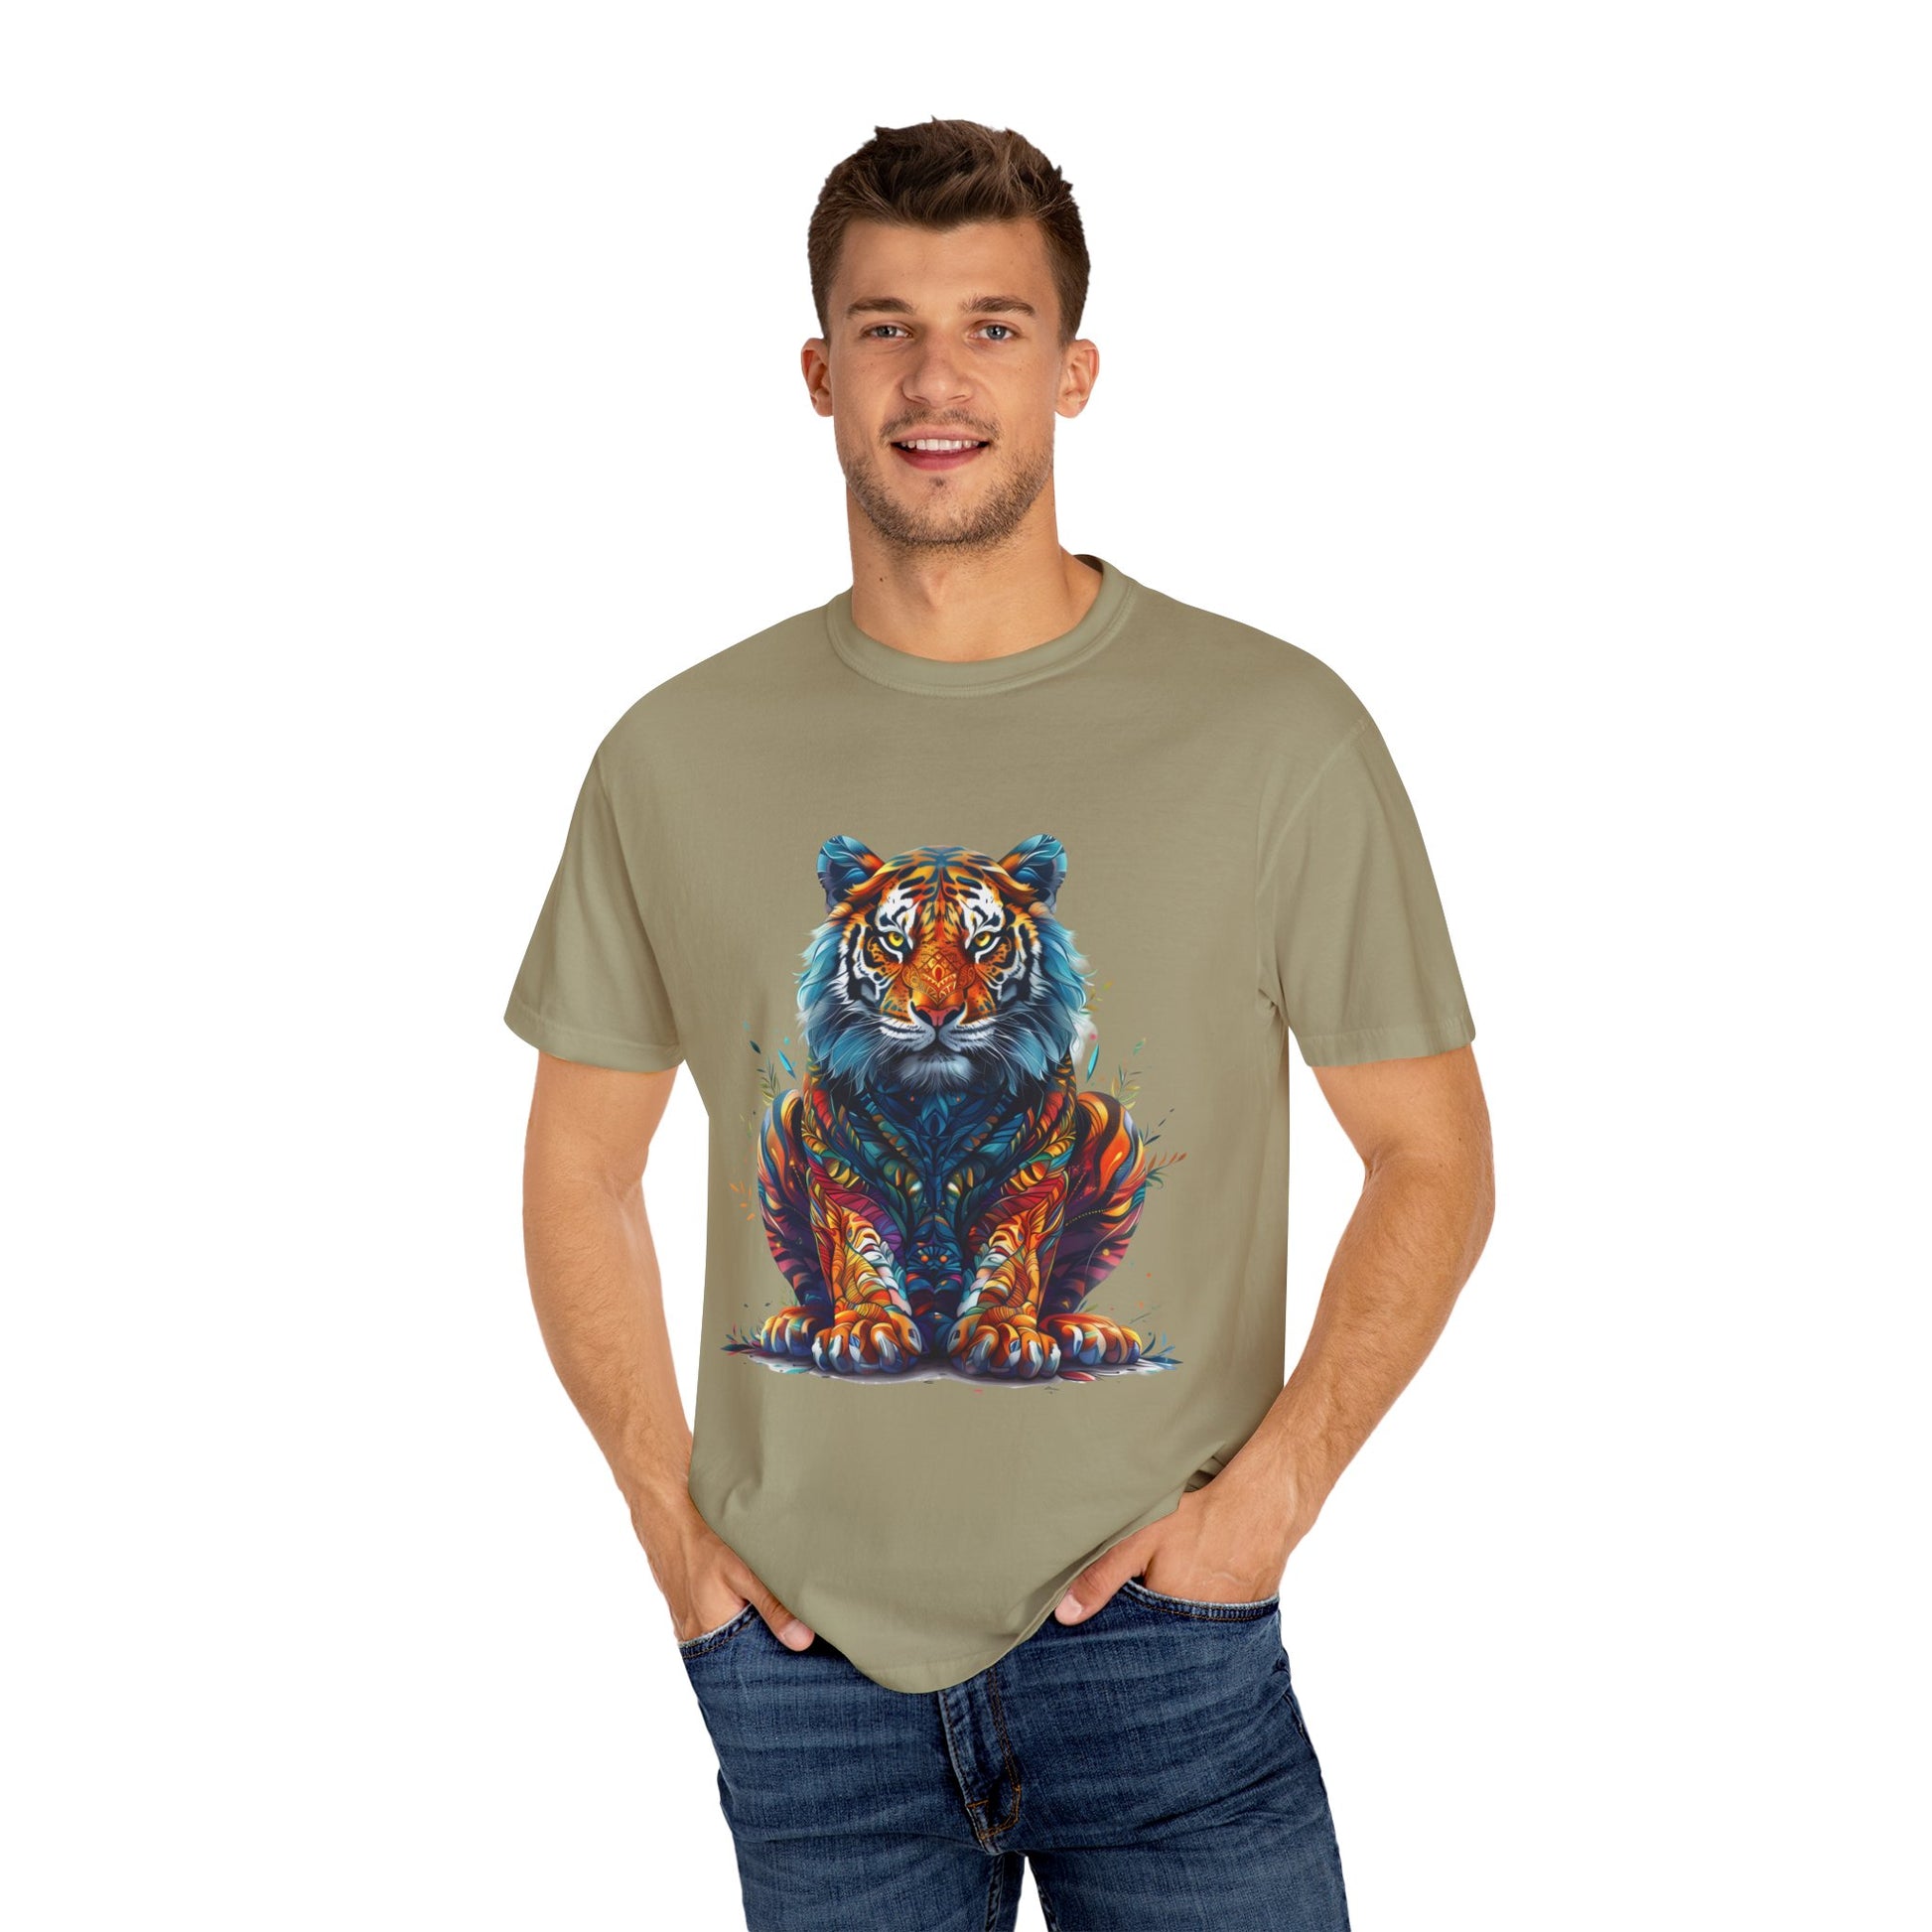 Lion Head Cool Graphic Design Novelty Unisex Garment-dyed T-shirt Cotton Funny Humorous Graphic Soft Premium Unisex Men Women Khaki T-shirt Birthday Gift-48